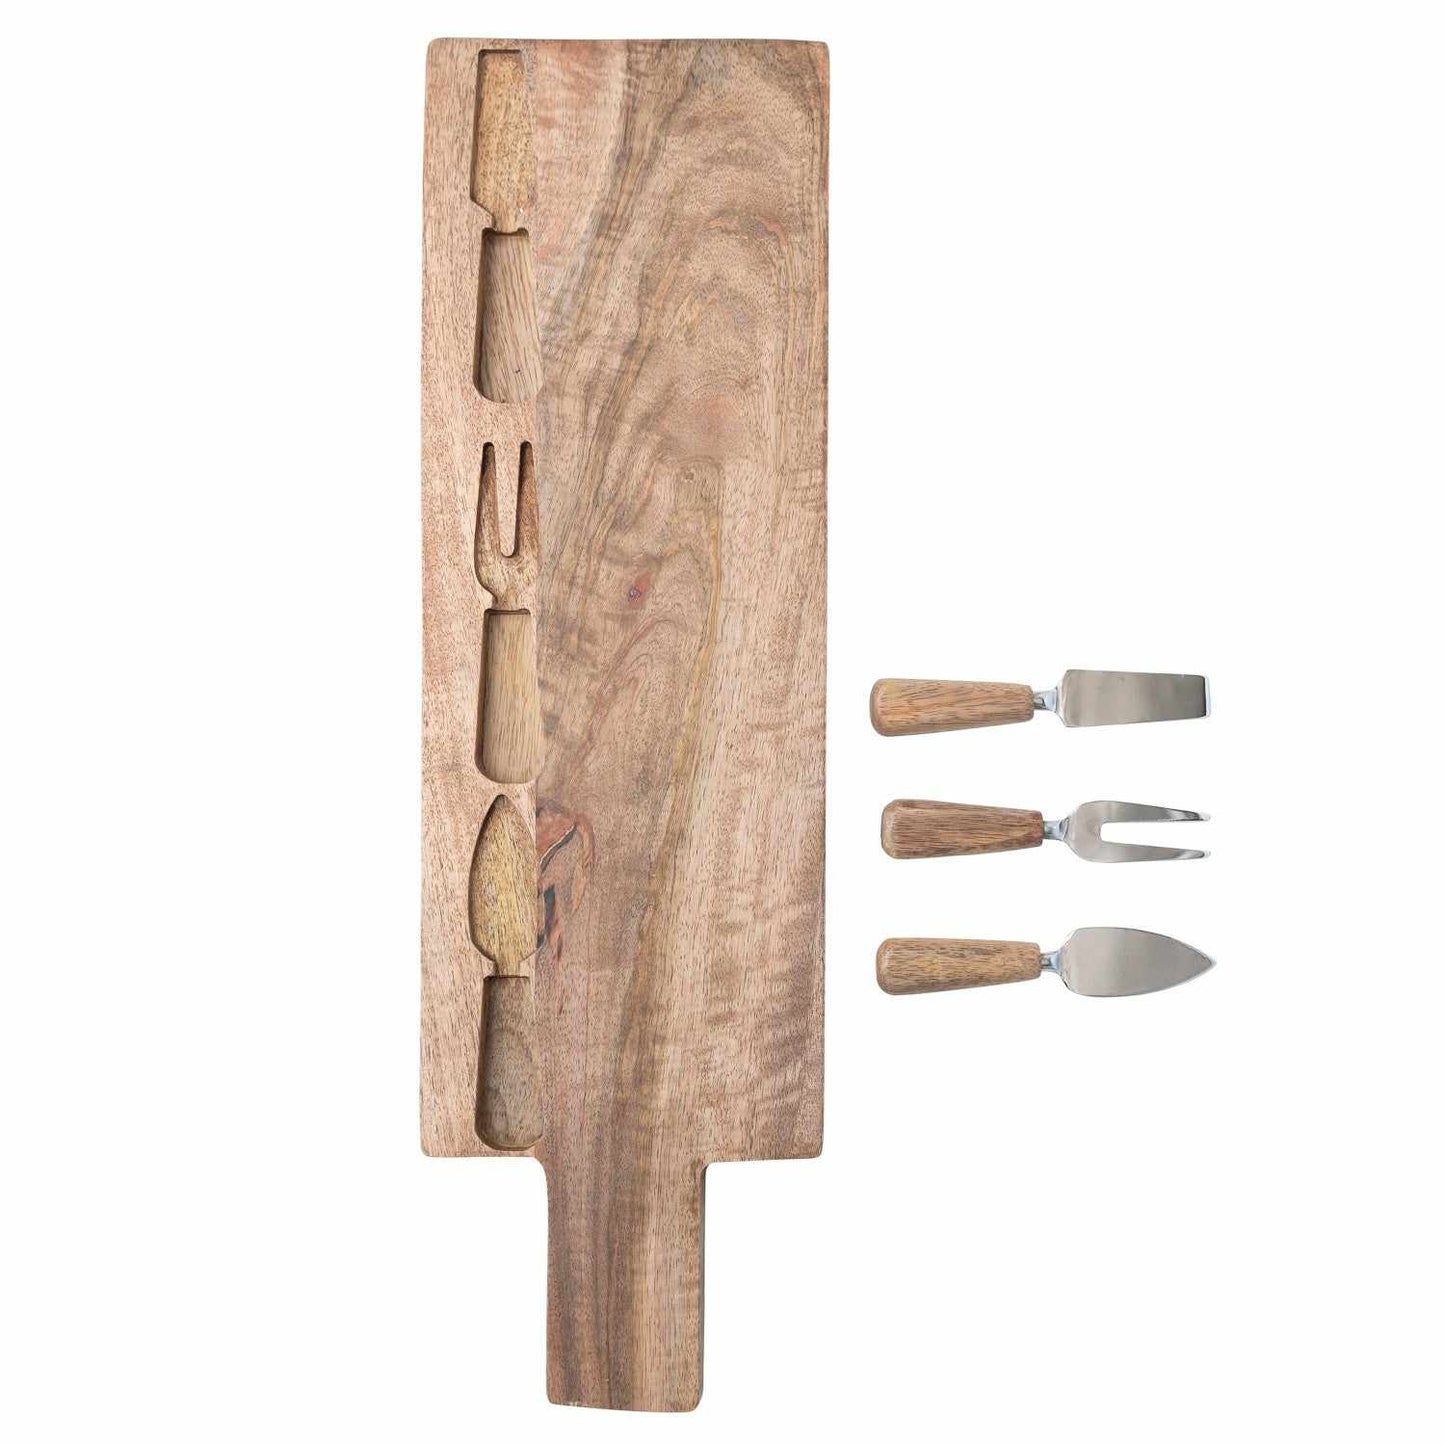 Mango Wood Cheese/Cutting Board w/ Handle & Cheese Utensils, Set of 4 | Bridal Shower Madyson Bowden & Collin Mathews